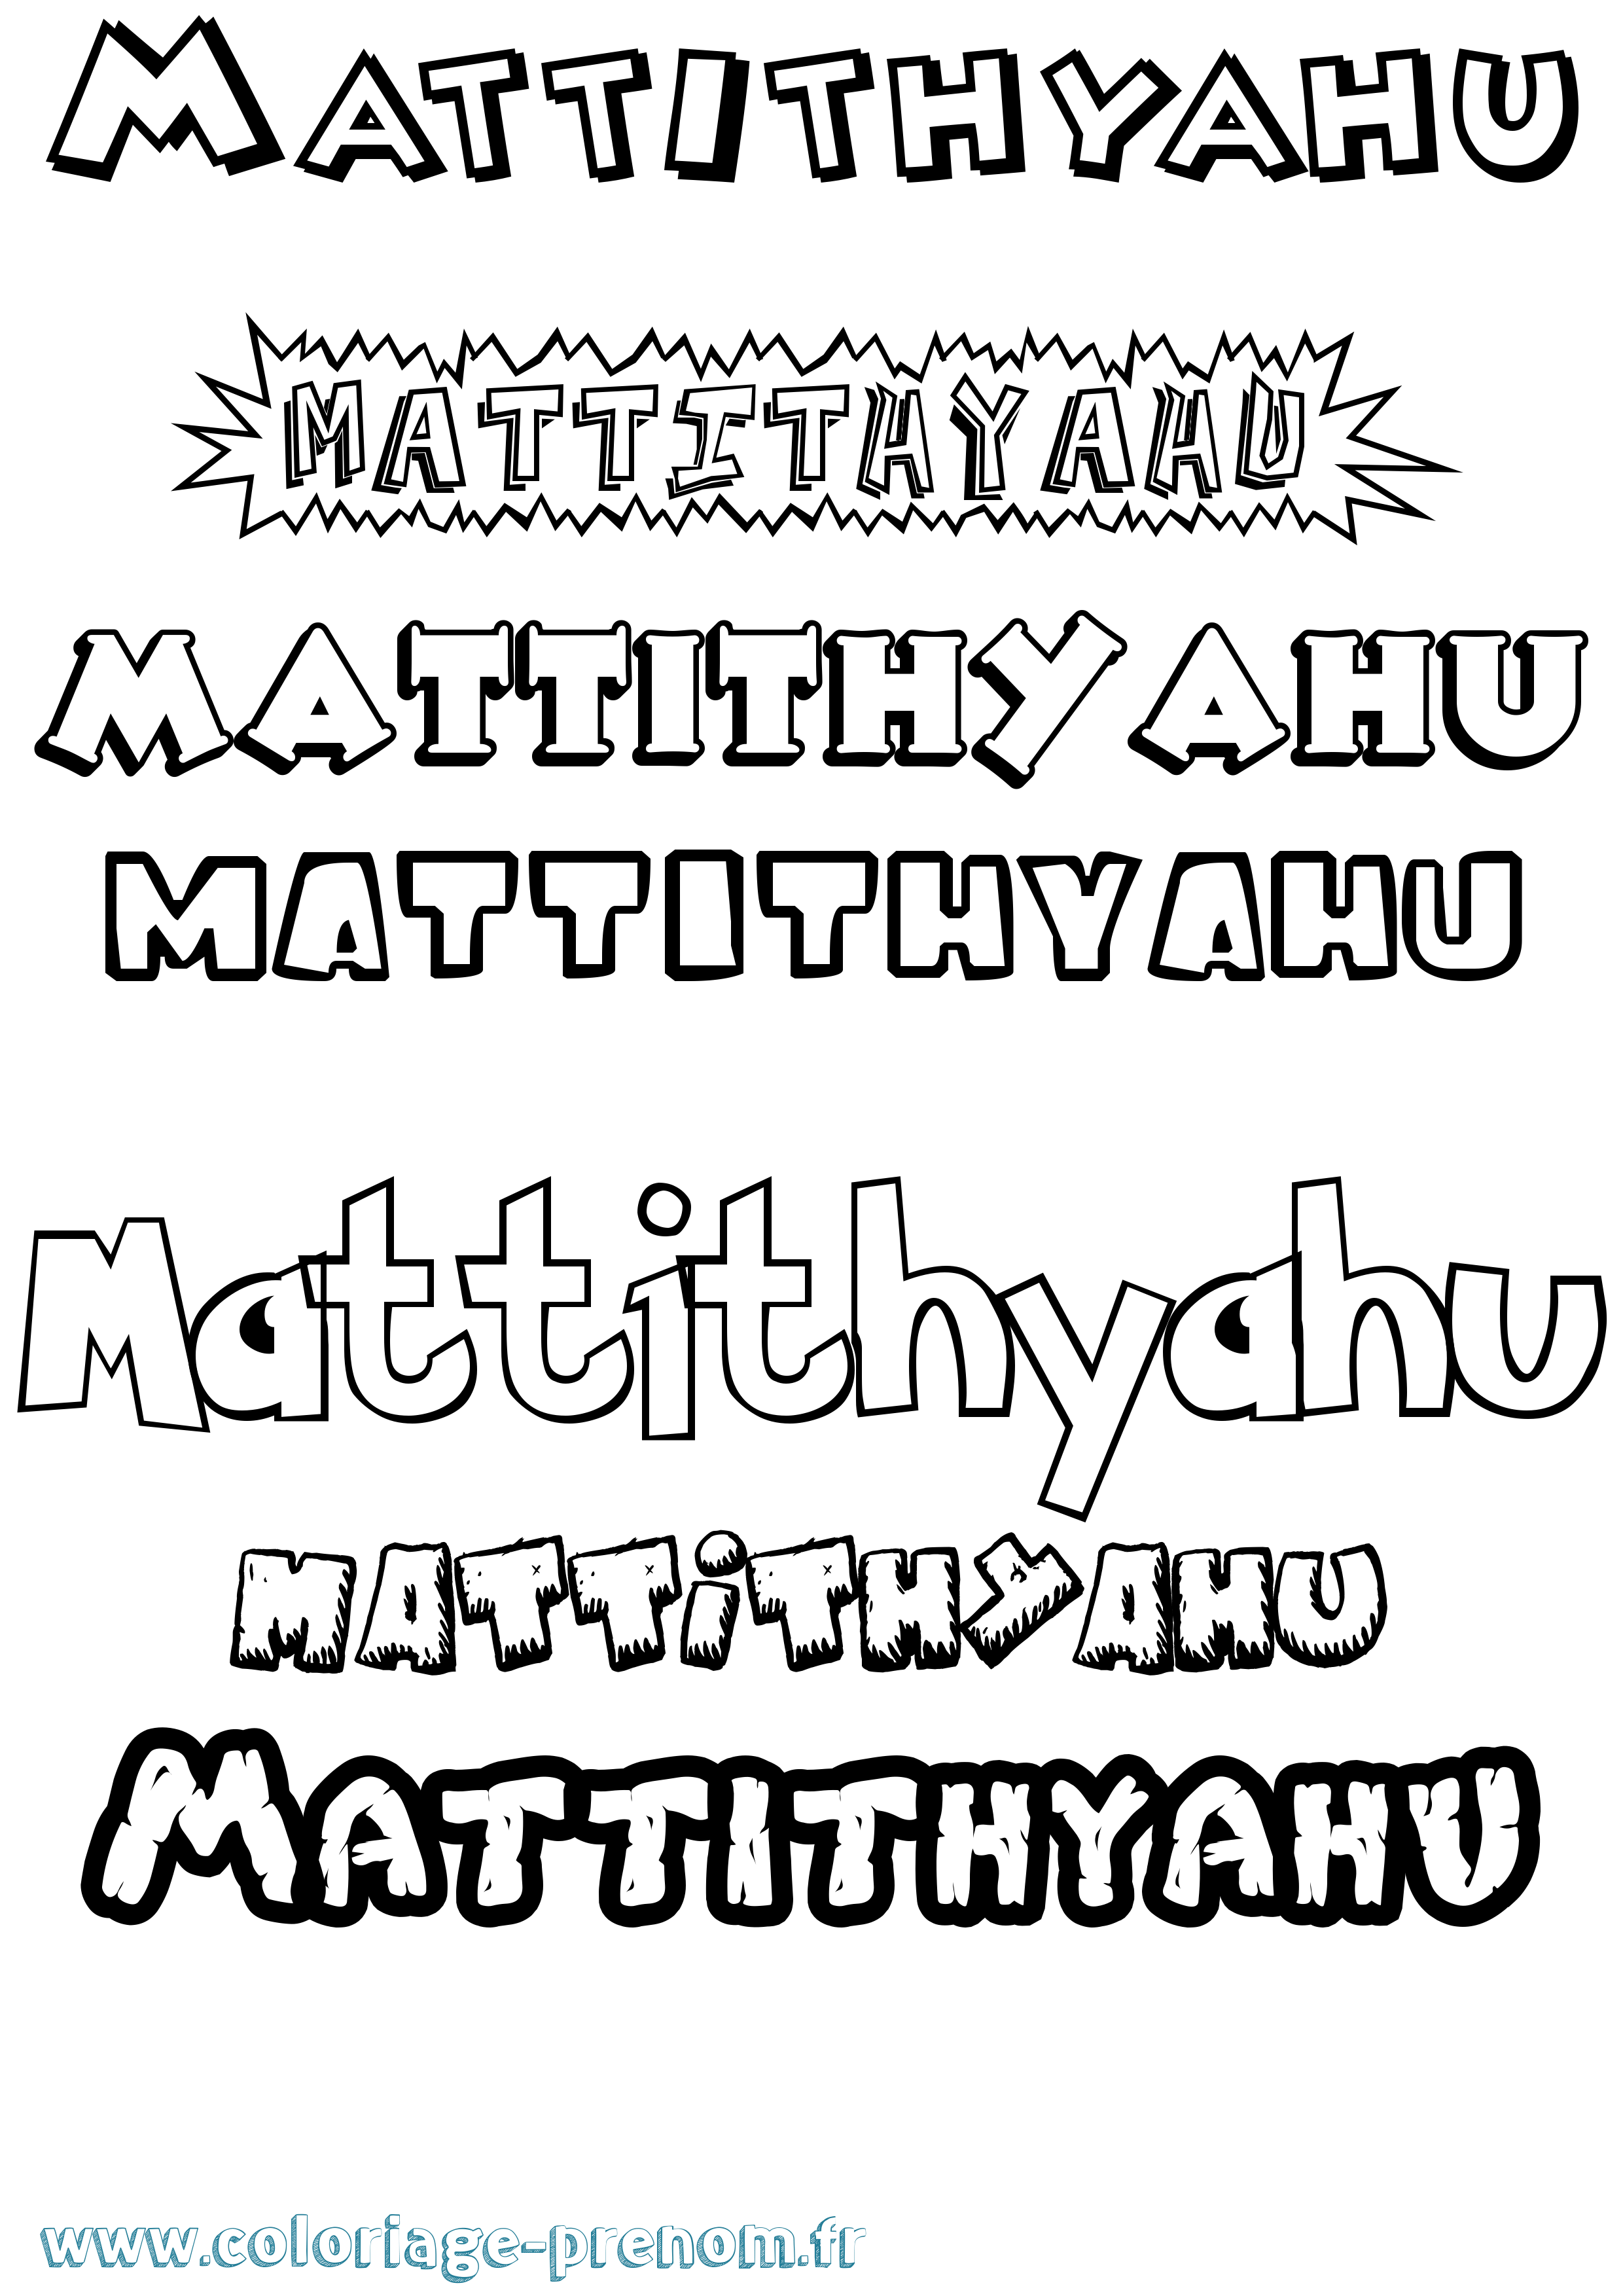 Coloriage prénom Mattithyahu Dessin Animé